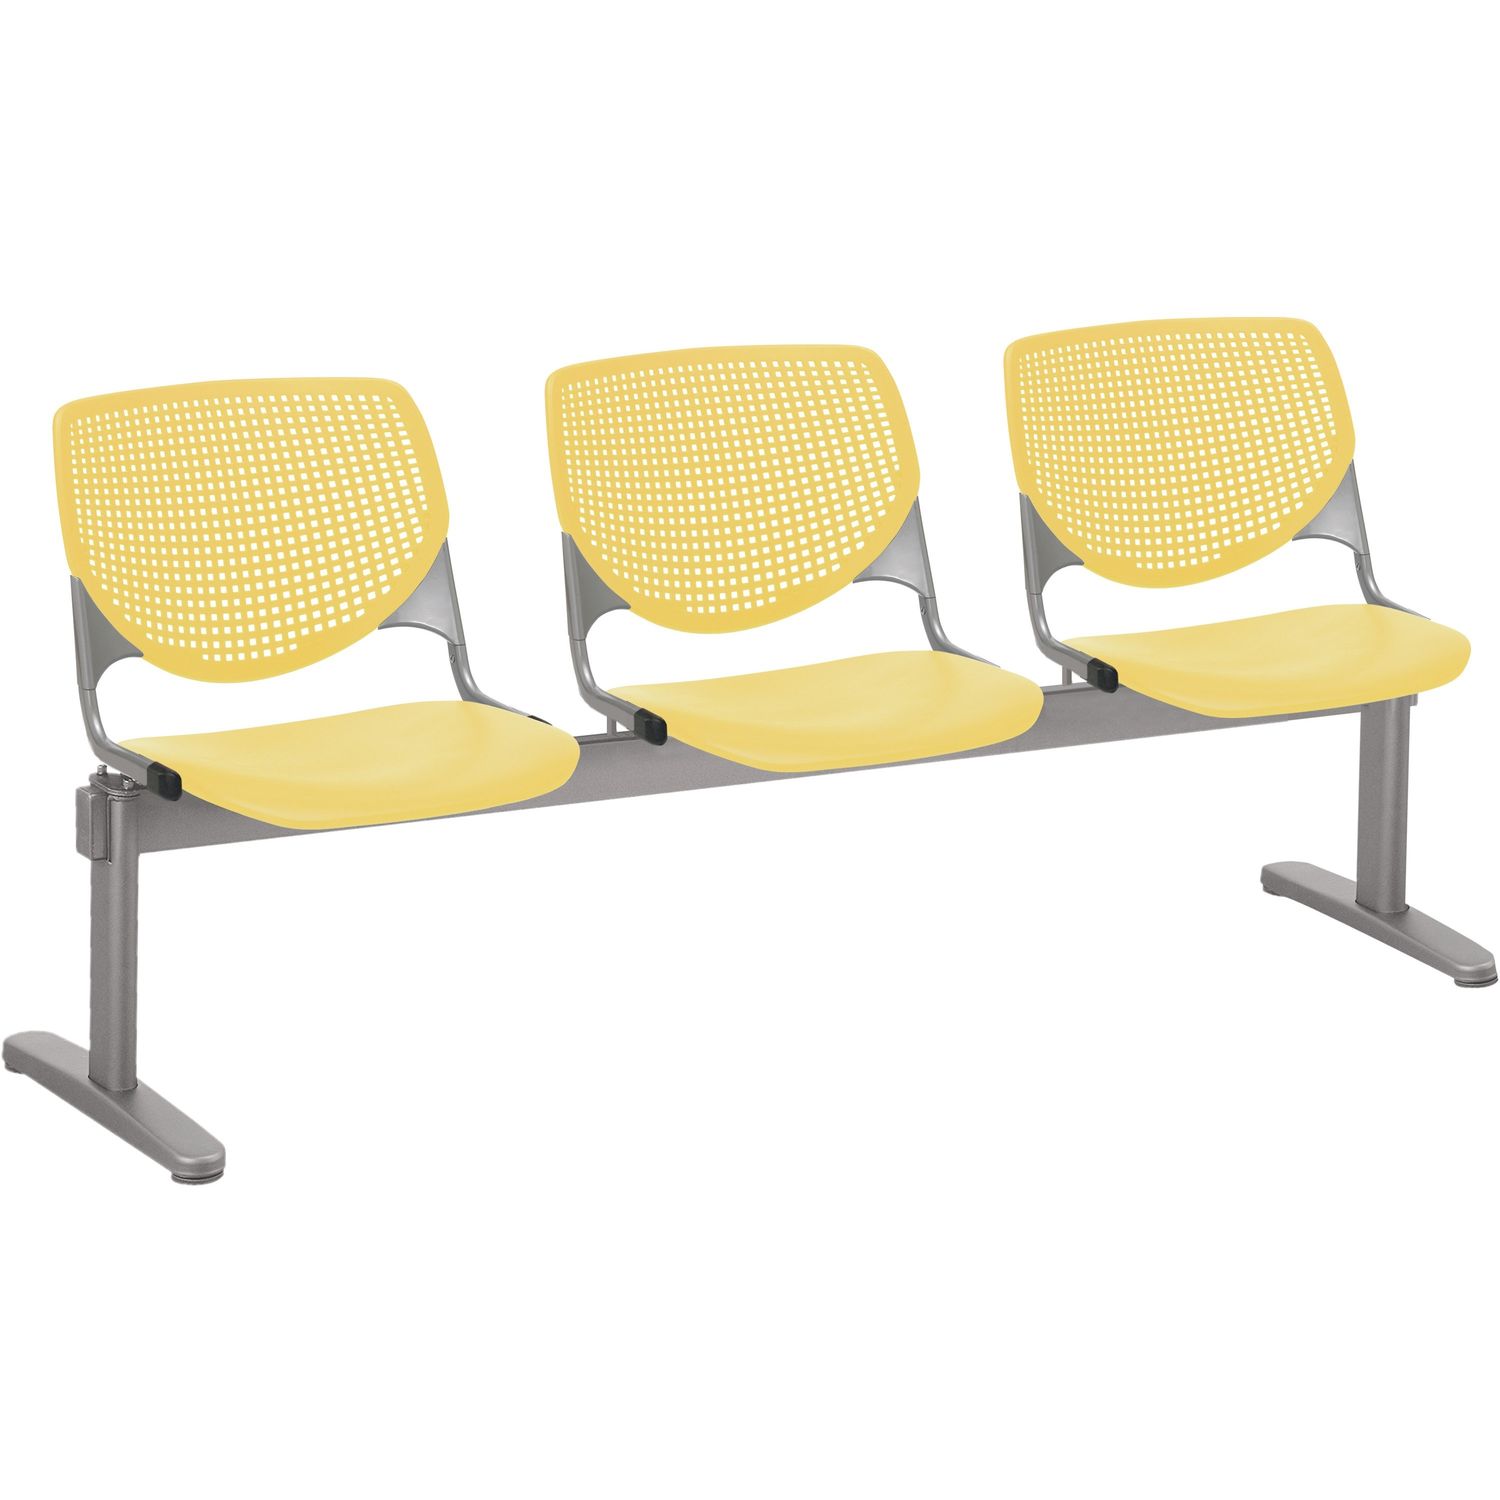 Kool 3 Seat Beam Chair Yellow Polypropylene Seat, Yellow Polypropylene, Aluminum Alloy Back, Powder Coated Silver Tubular Steel Frame, 1 Each